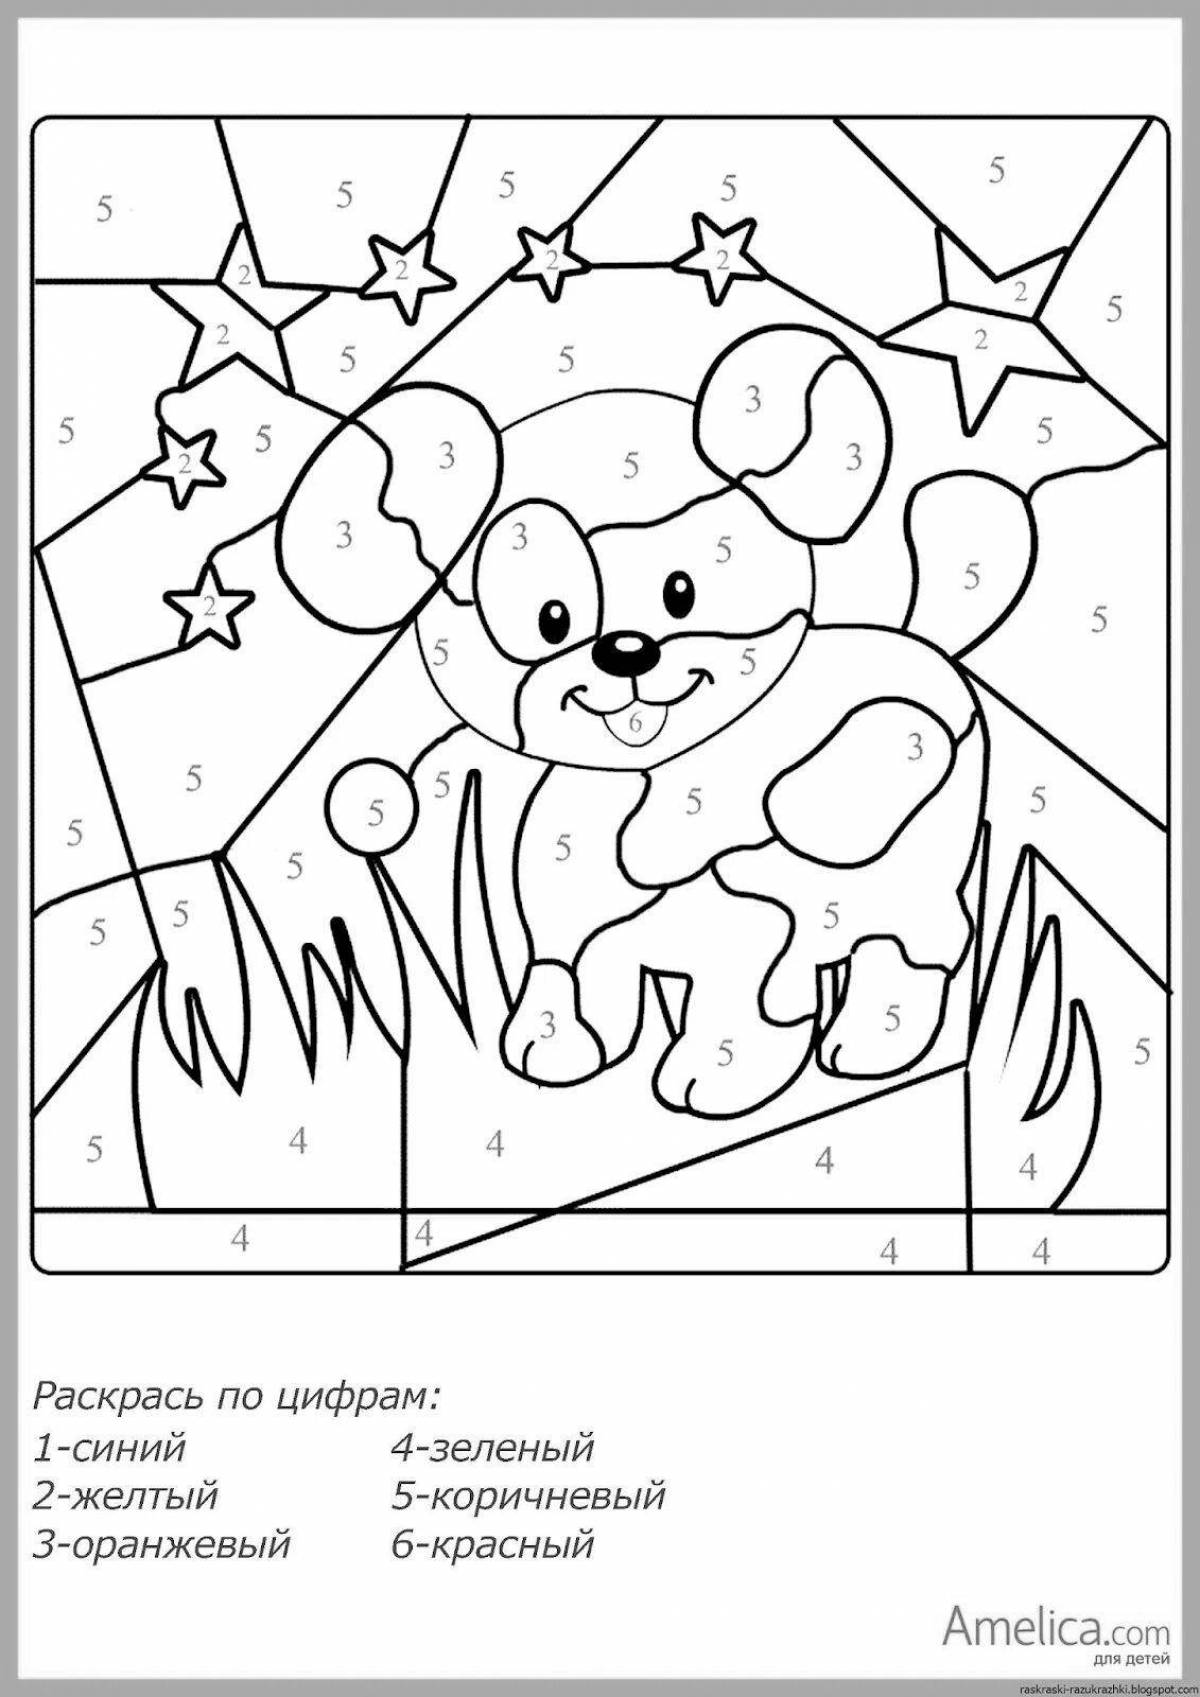 Digital splatter coloring book for 7 year olds